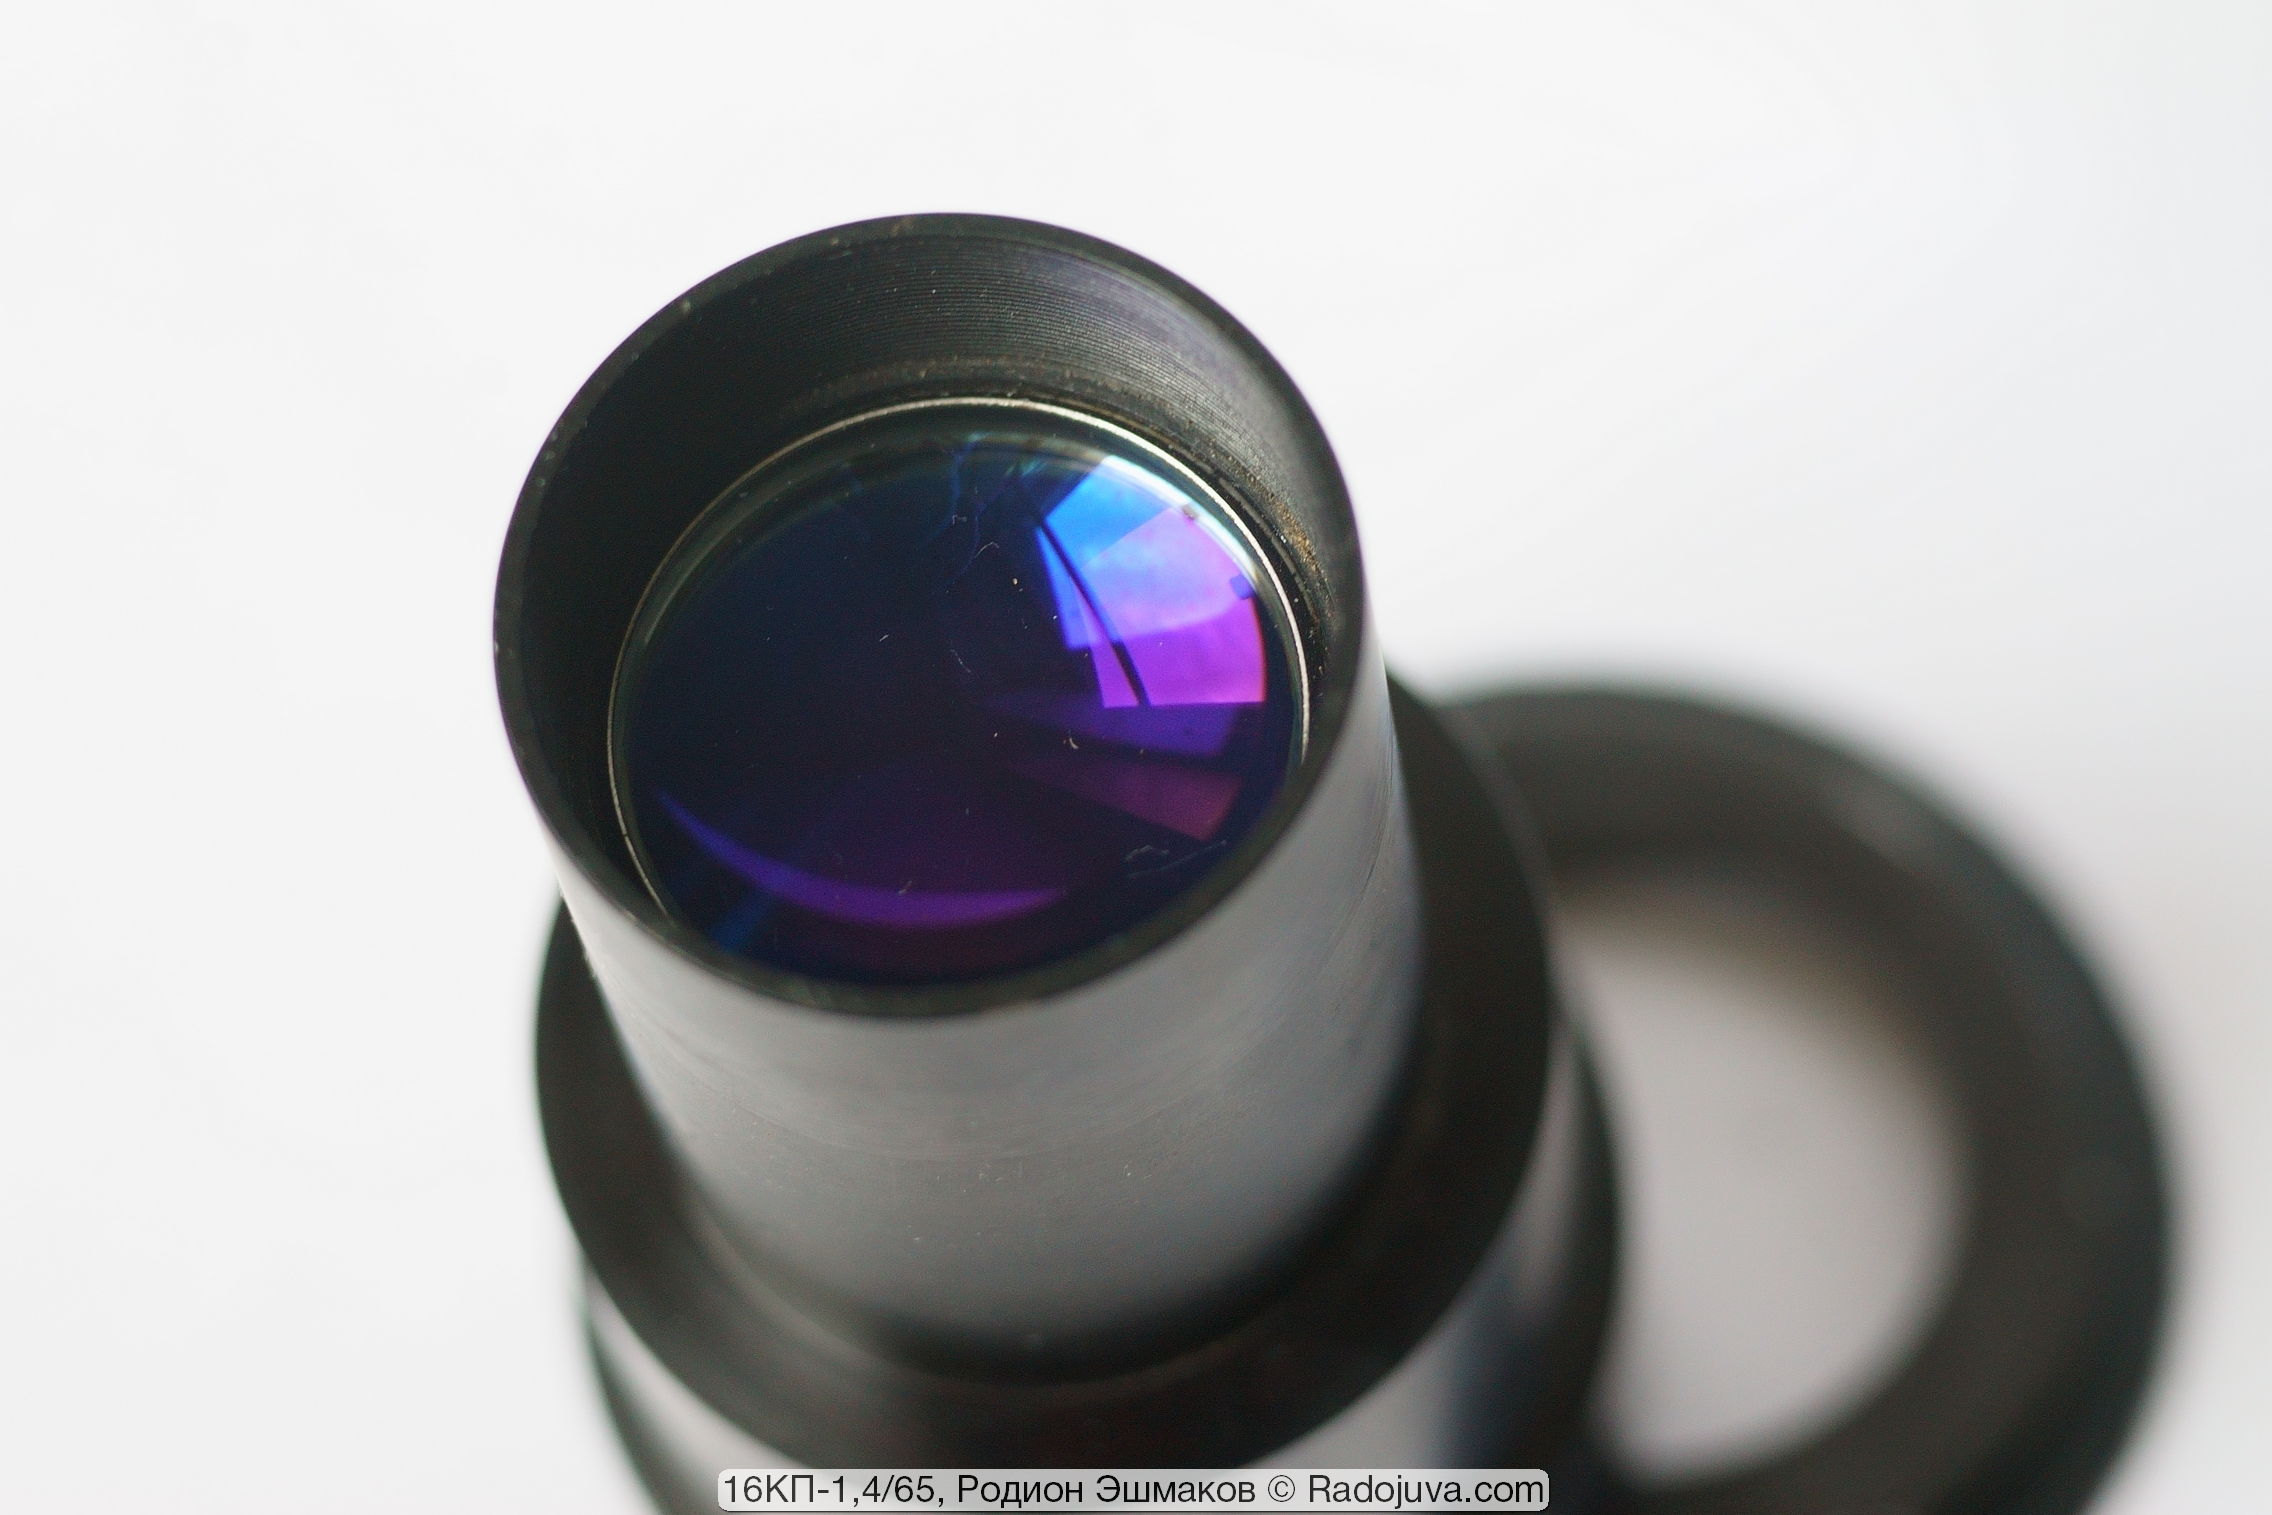 Violet-blue coating of the rear objective lens.